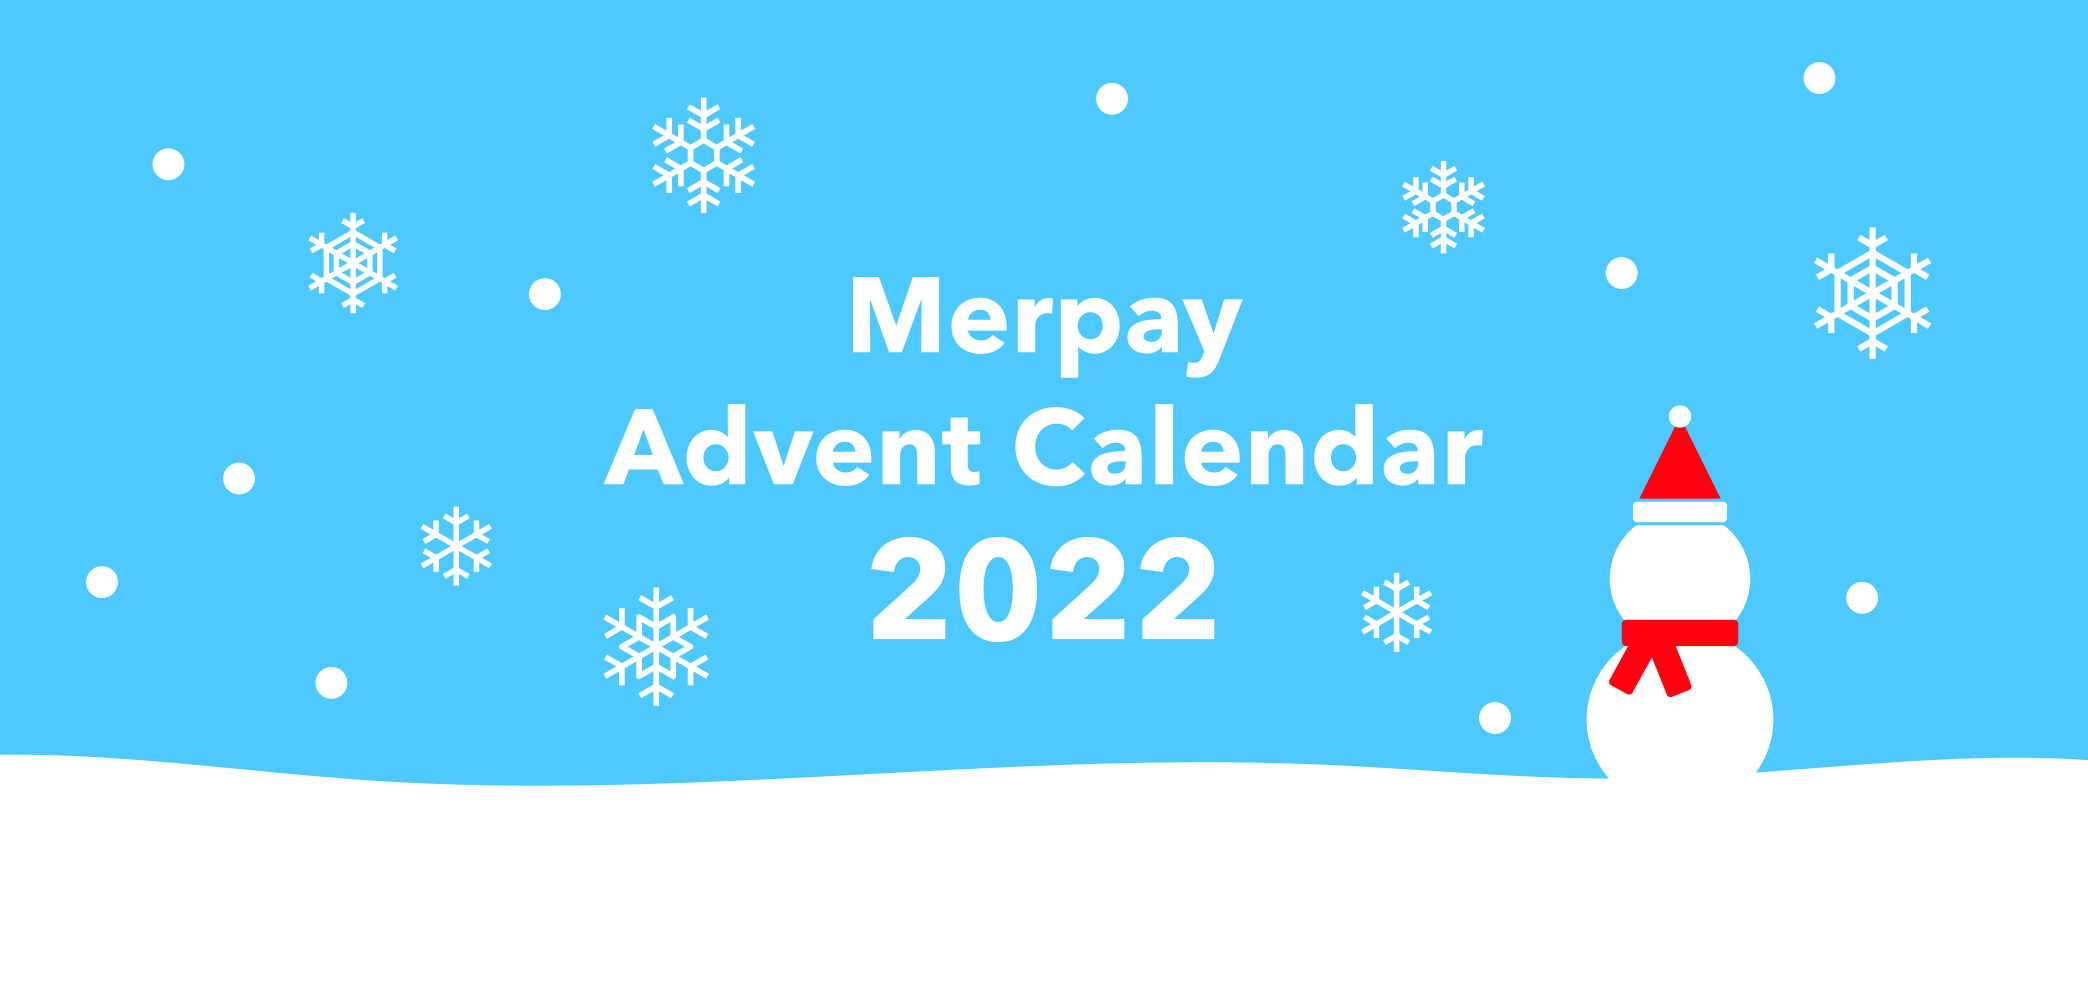 「Merpay Advent Calendar 2022」開催のお知らせ